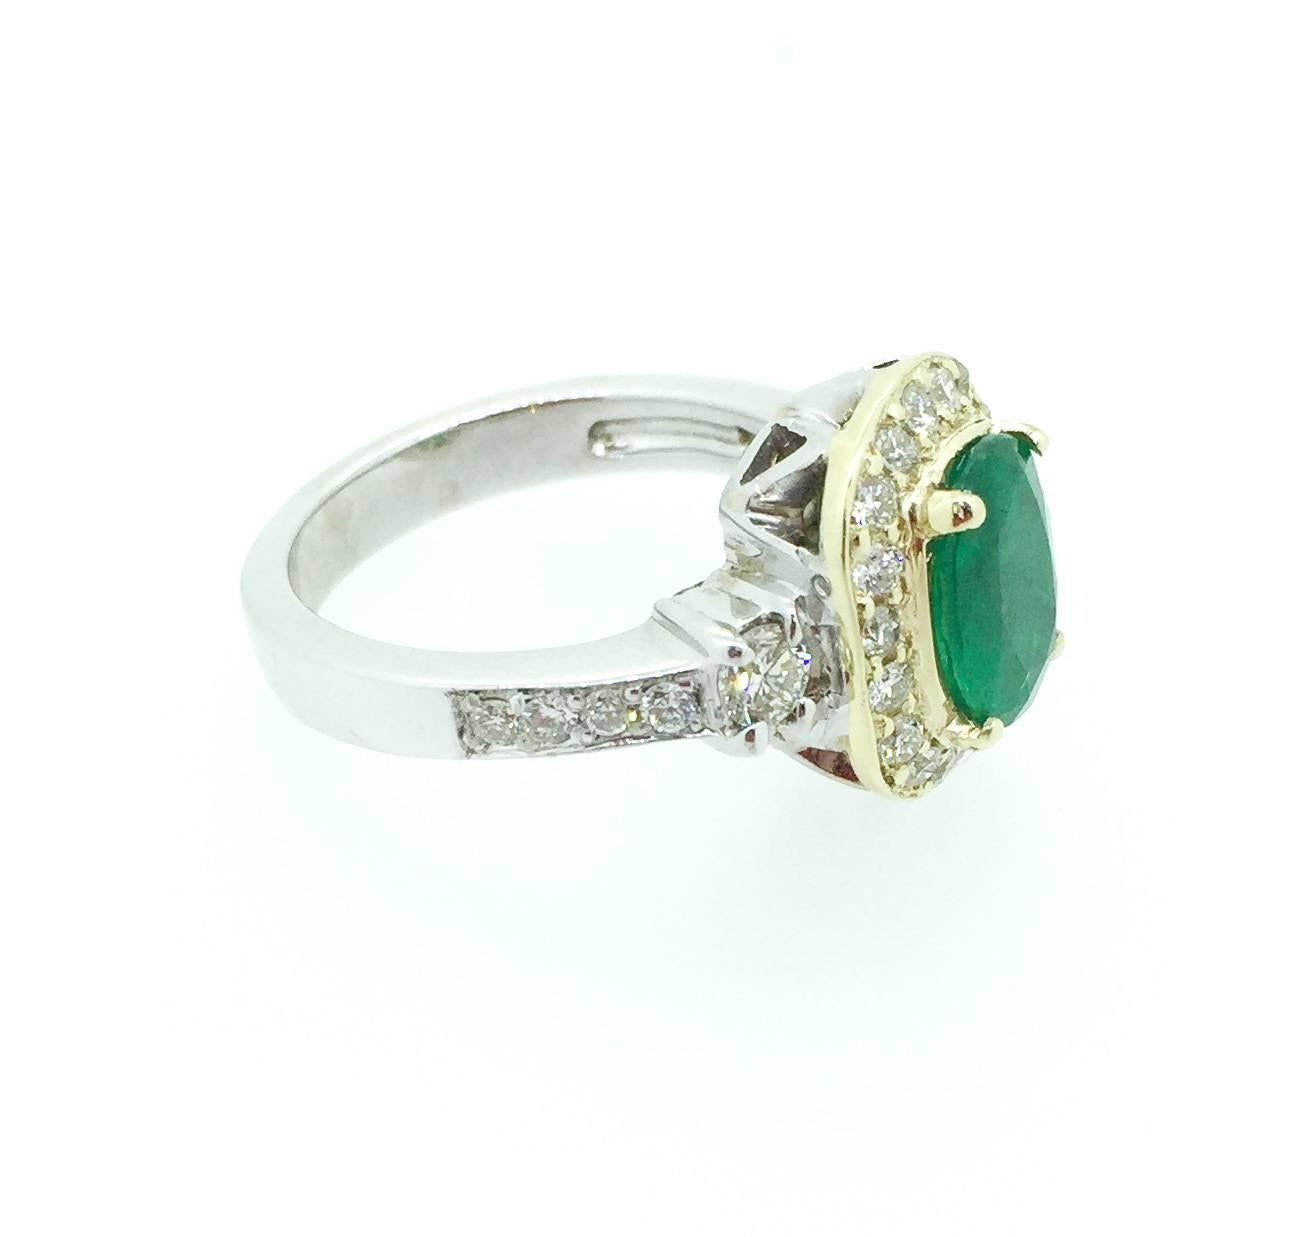 Oval Cut 2.43 Carat Emerald Diamond Engagement Ring